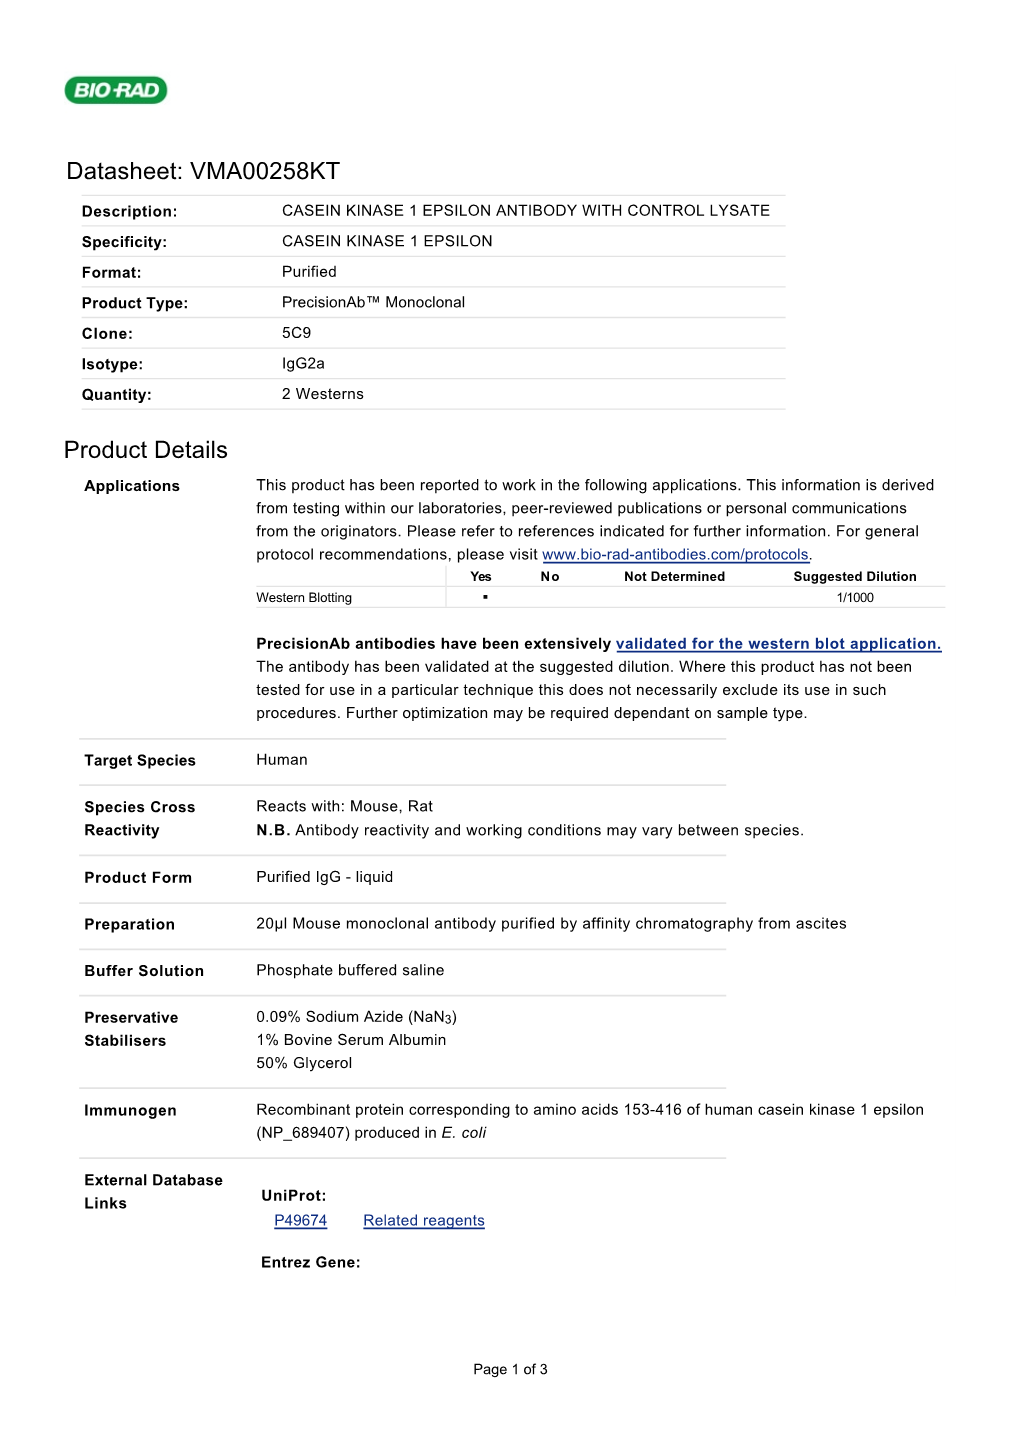 Datasheet: VMA00258KT Product Details